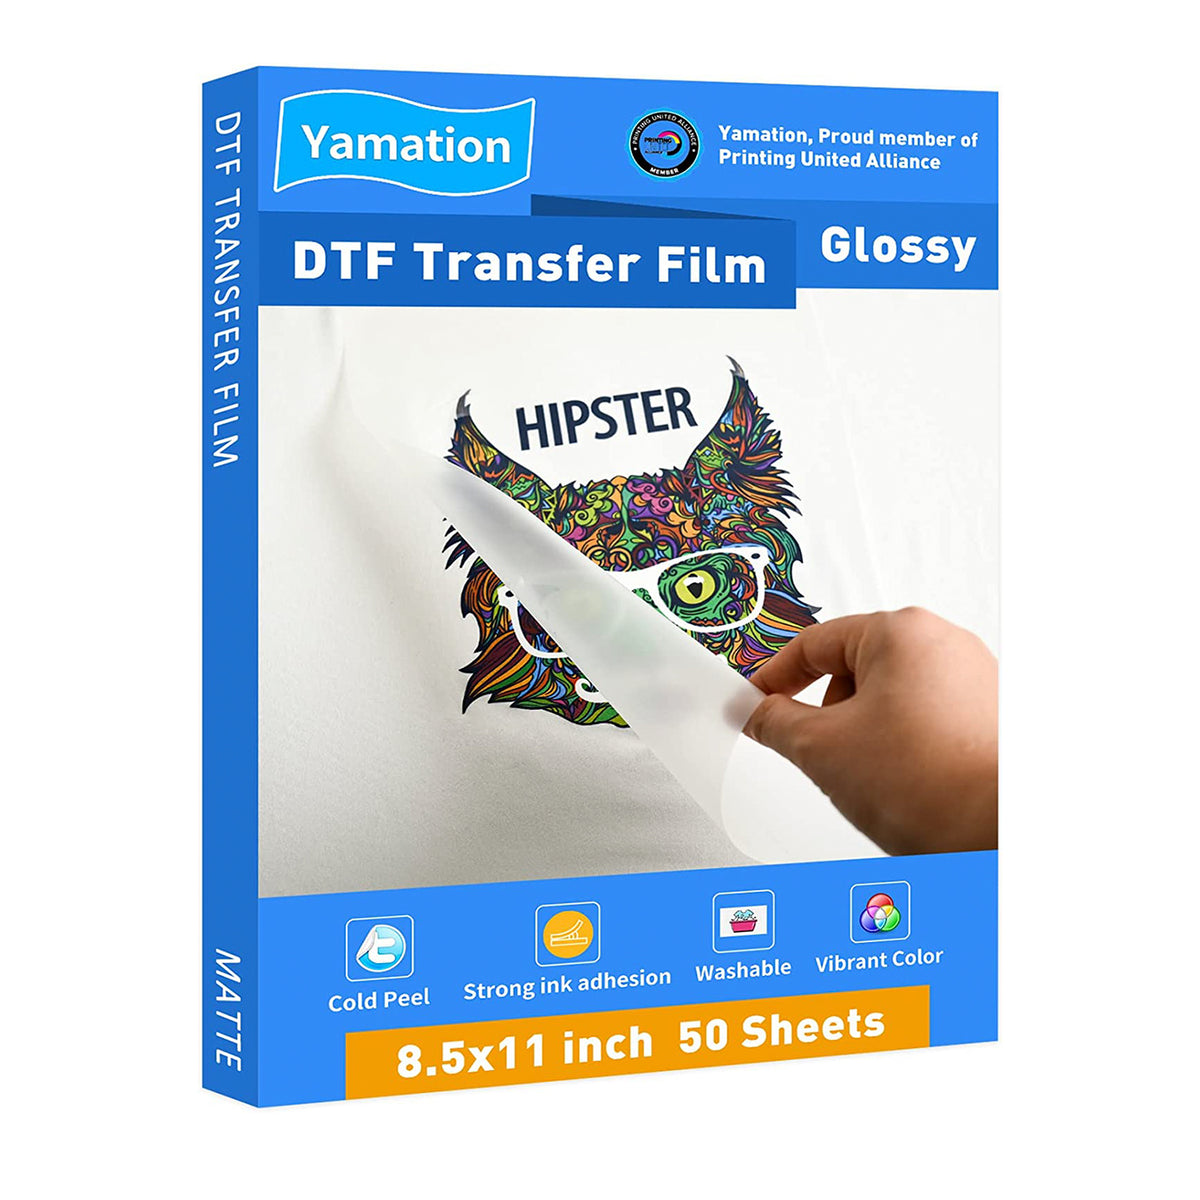 DTF Transfer Film